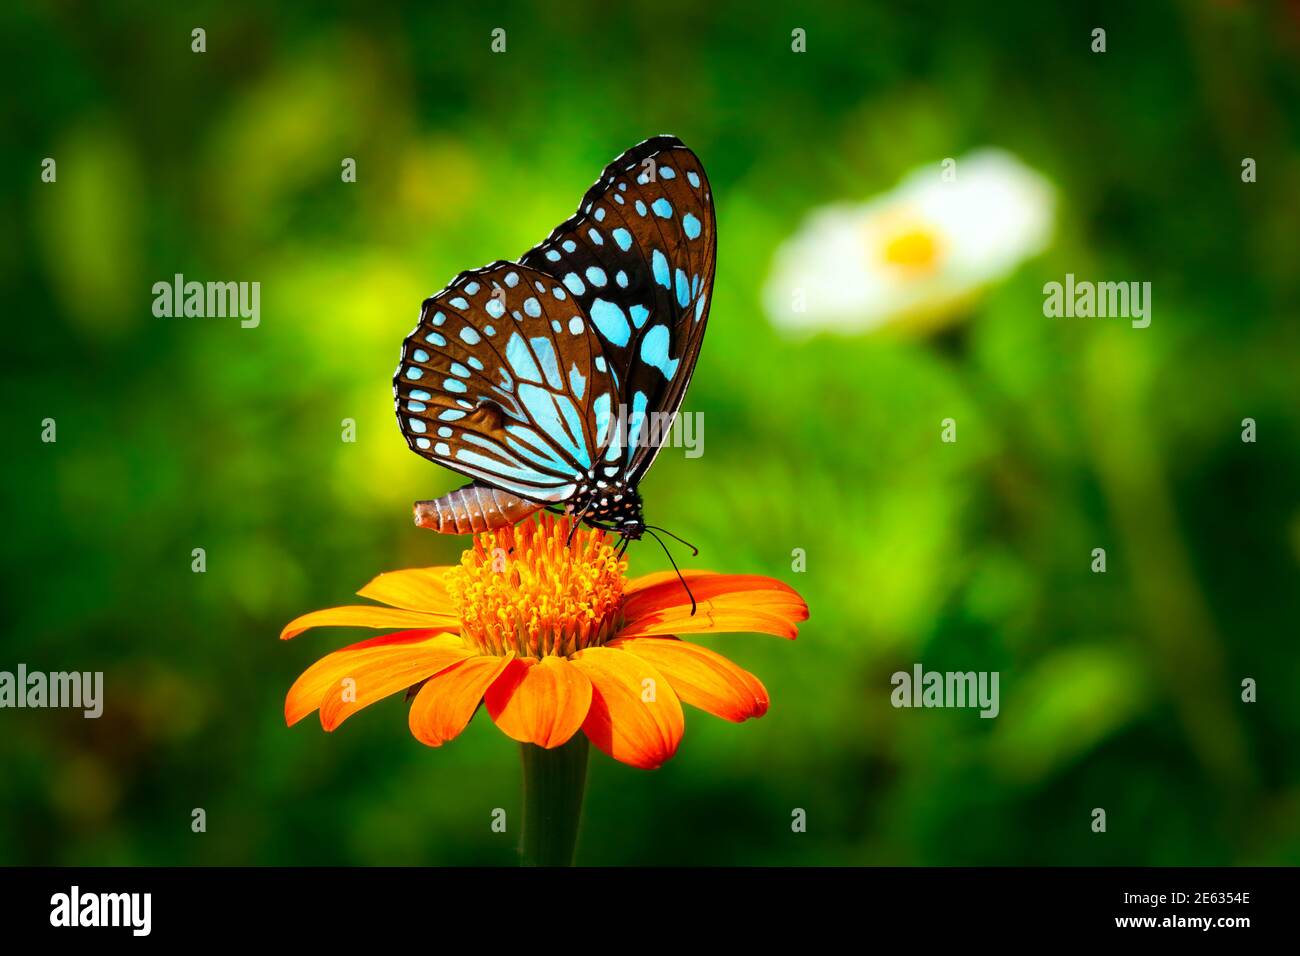 Mariposa Tigre azul o danaid Tirumala limniace sobre la flor de naranja el girasol rojo o el girasol mexicano (Tithonia rotundifolia, familia Asteraceae), w Foto de stock